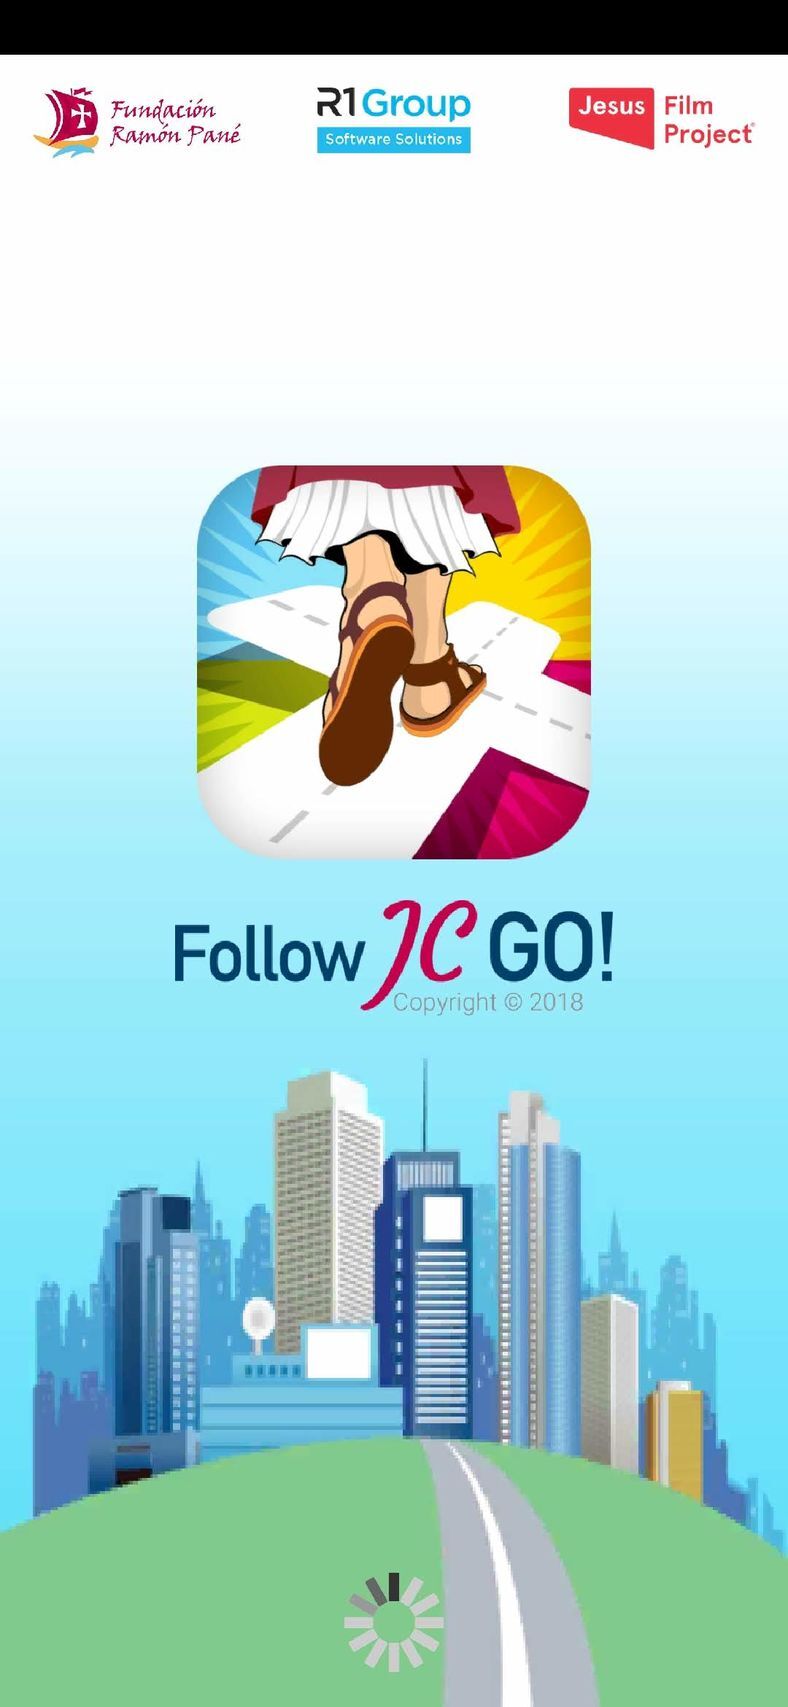 Follow JC Go!